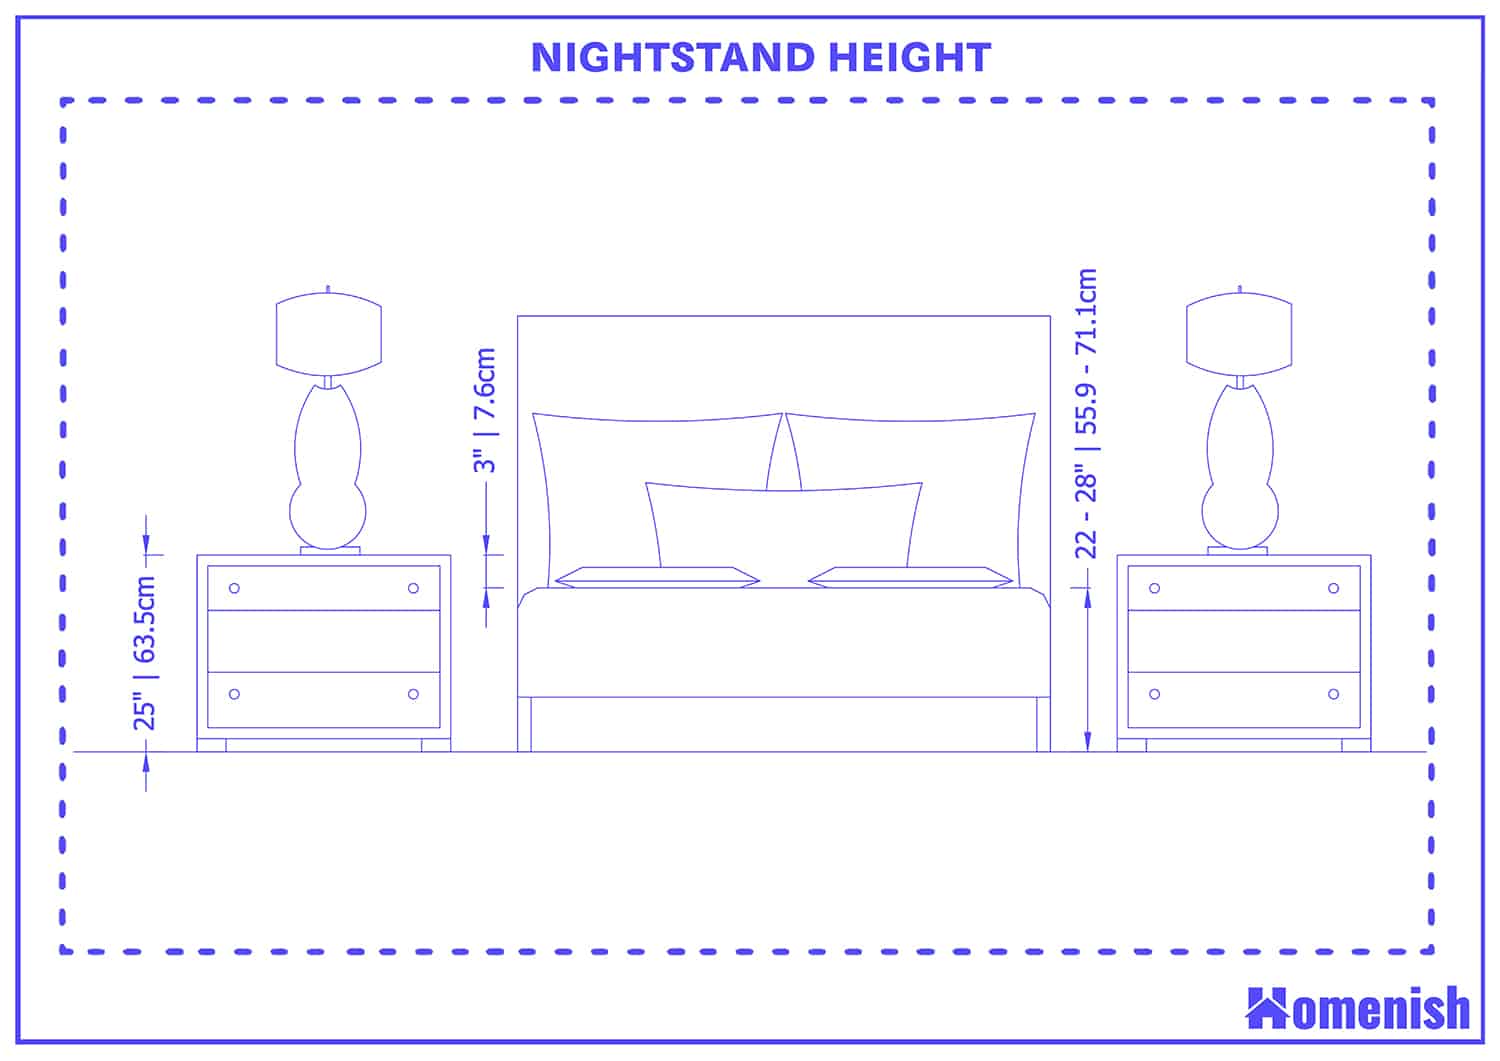 Nightstand height